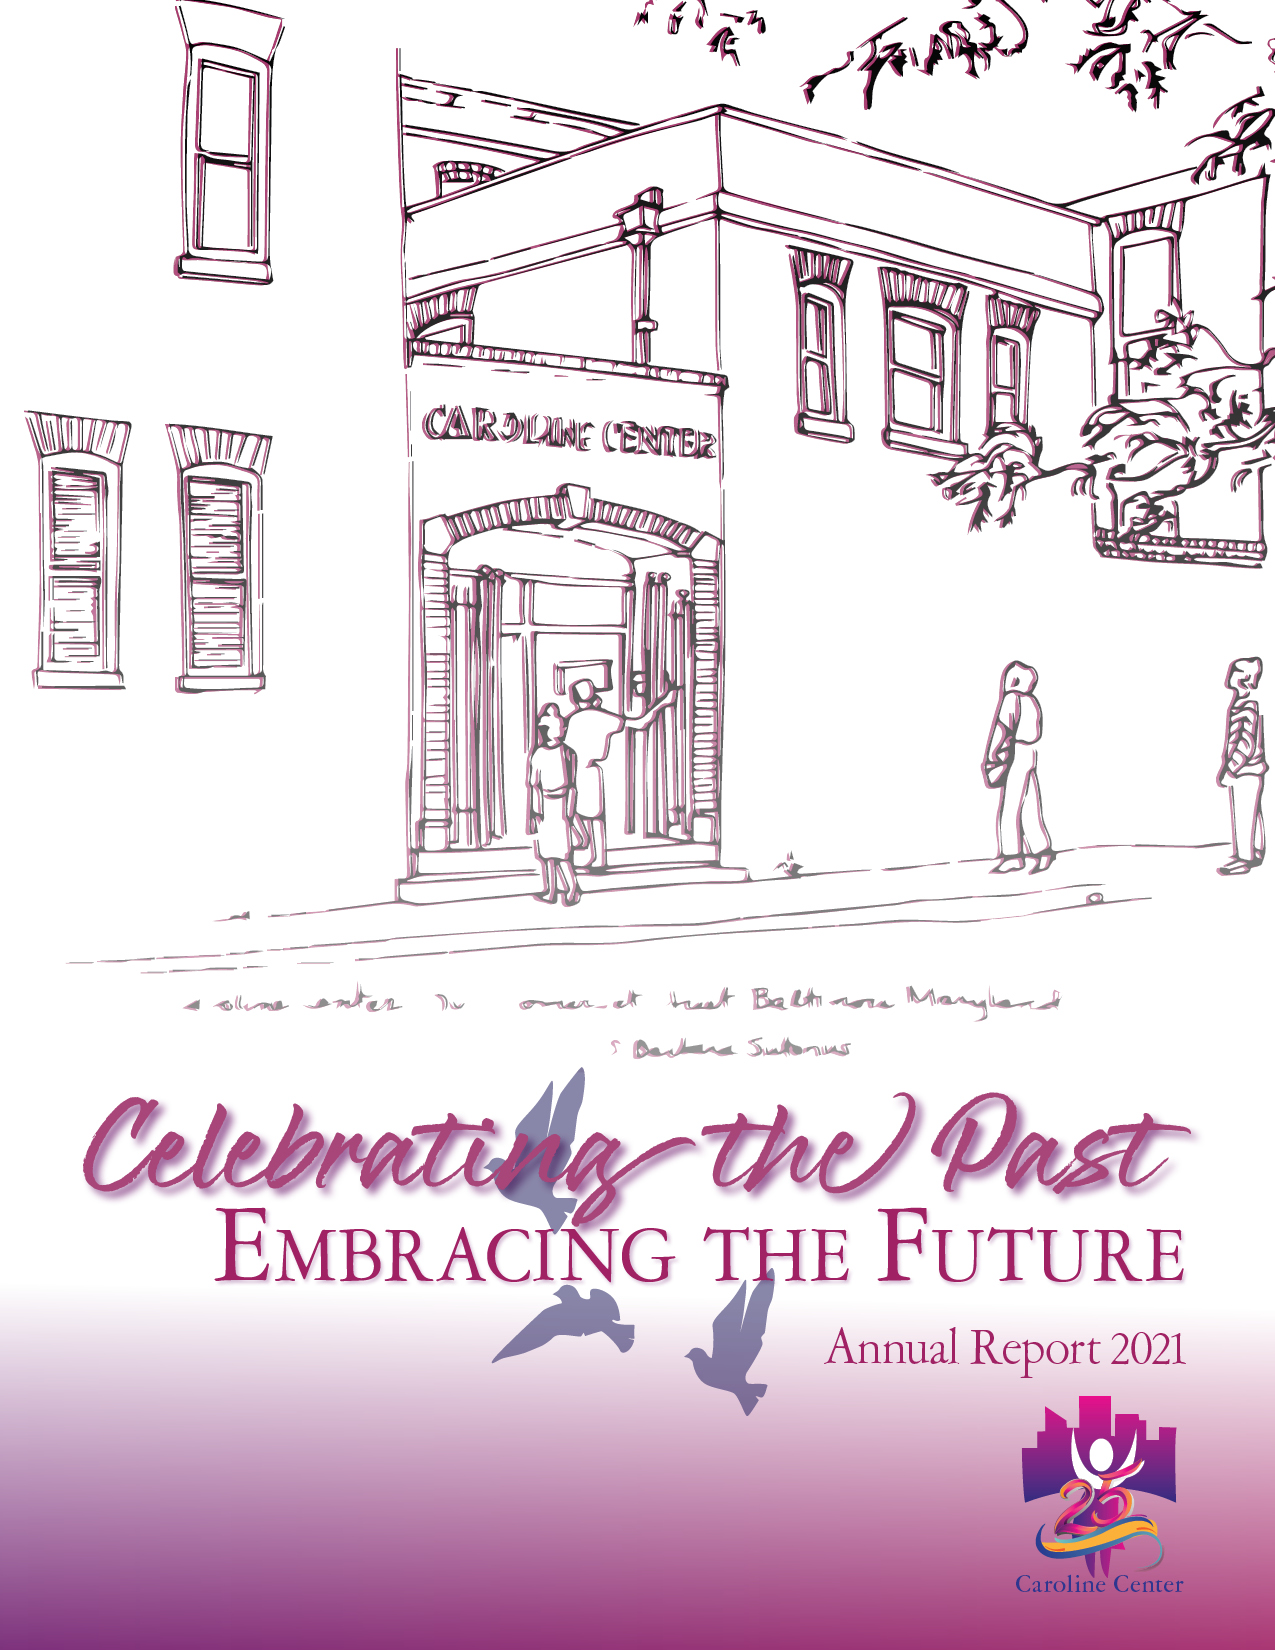 Caroline Center Annual Report Cover